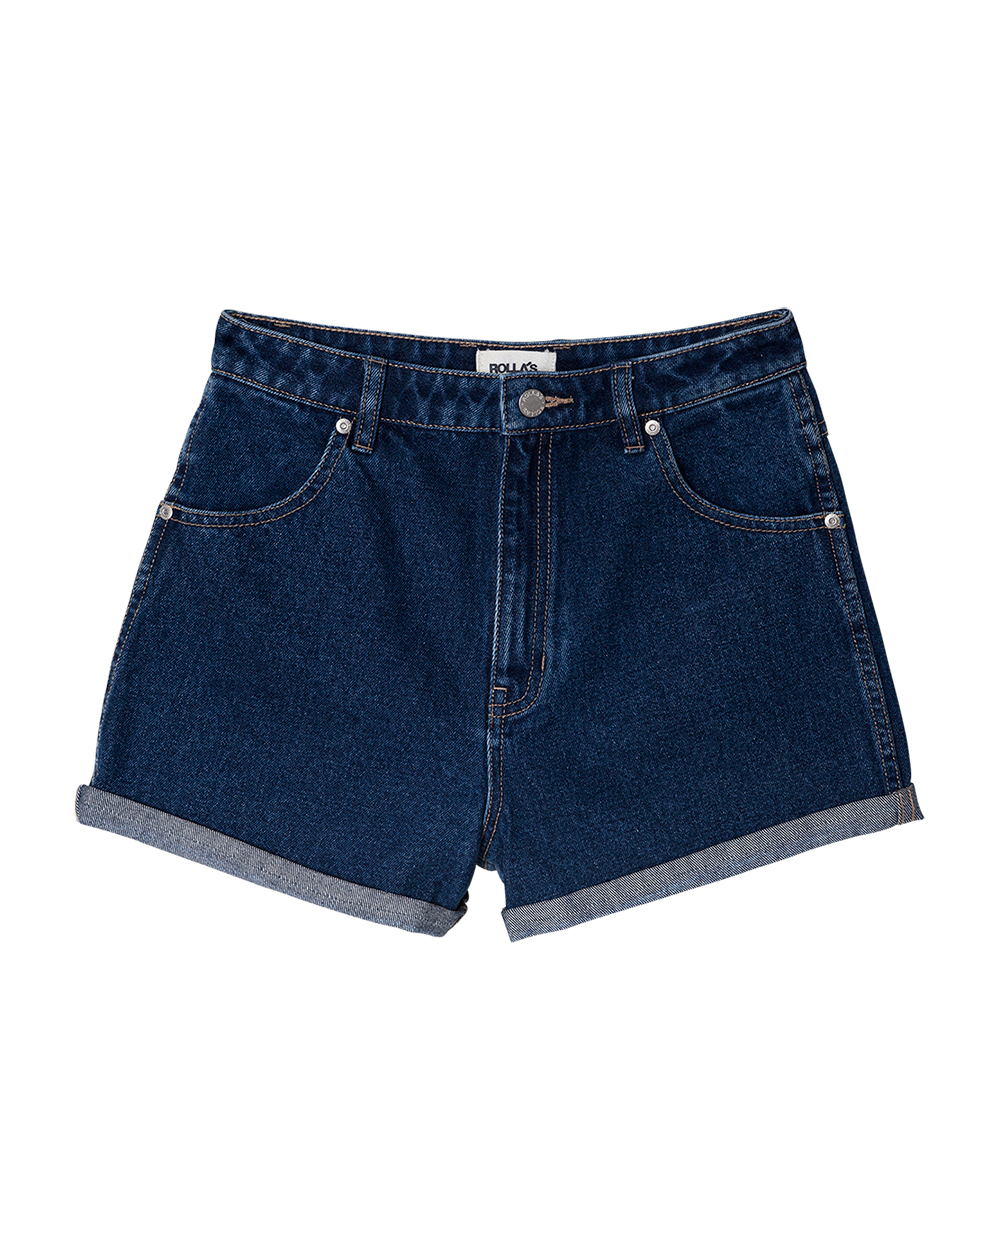 Rolla’s shorts, $89.99